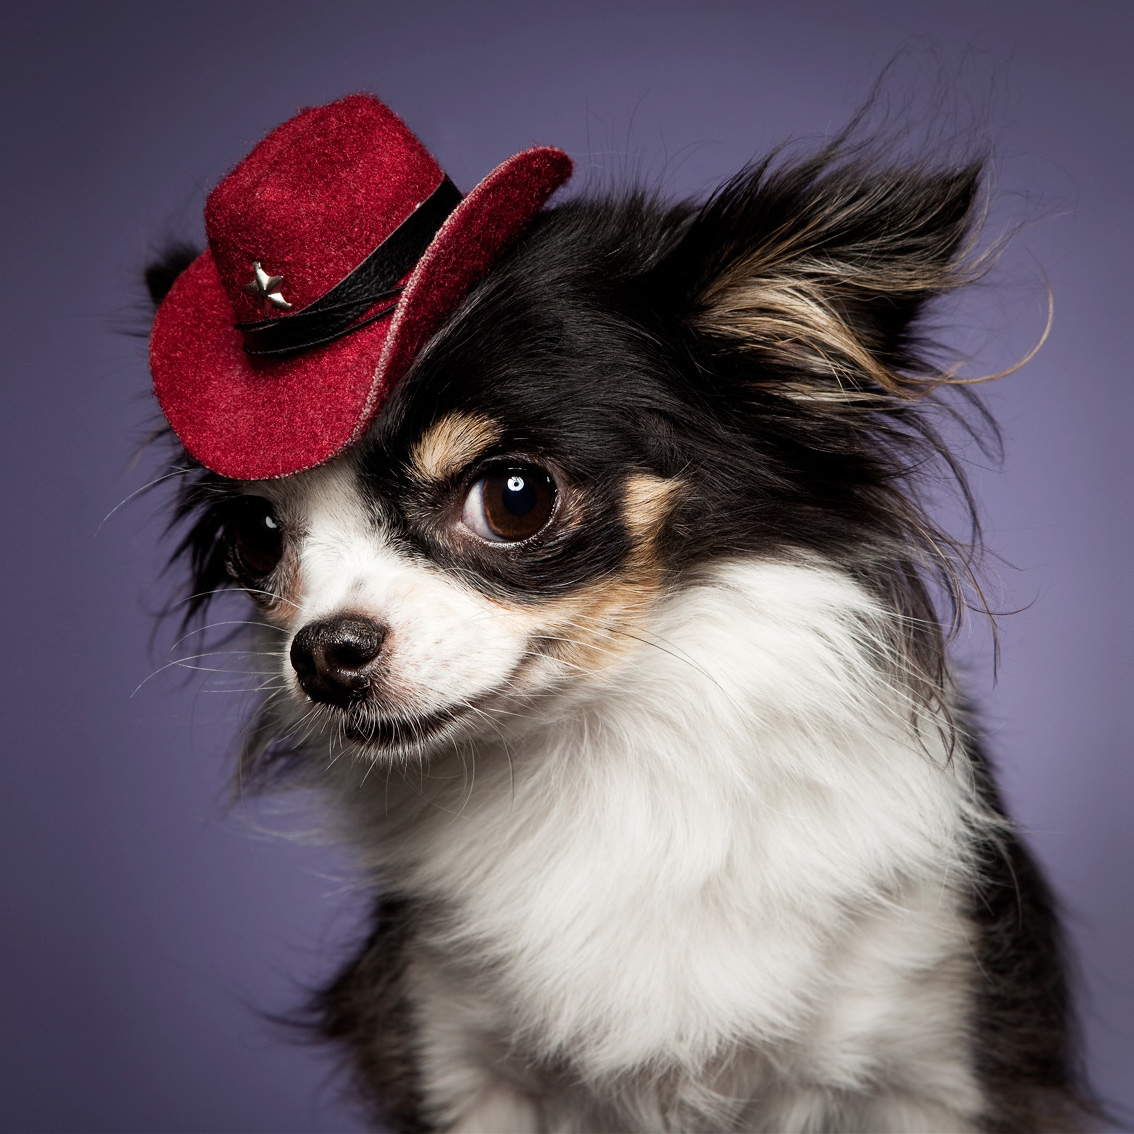 Dog cowboy hat